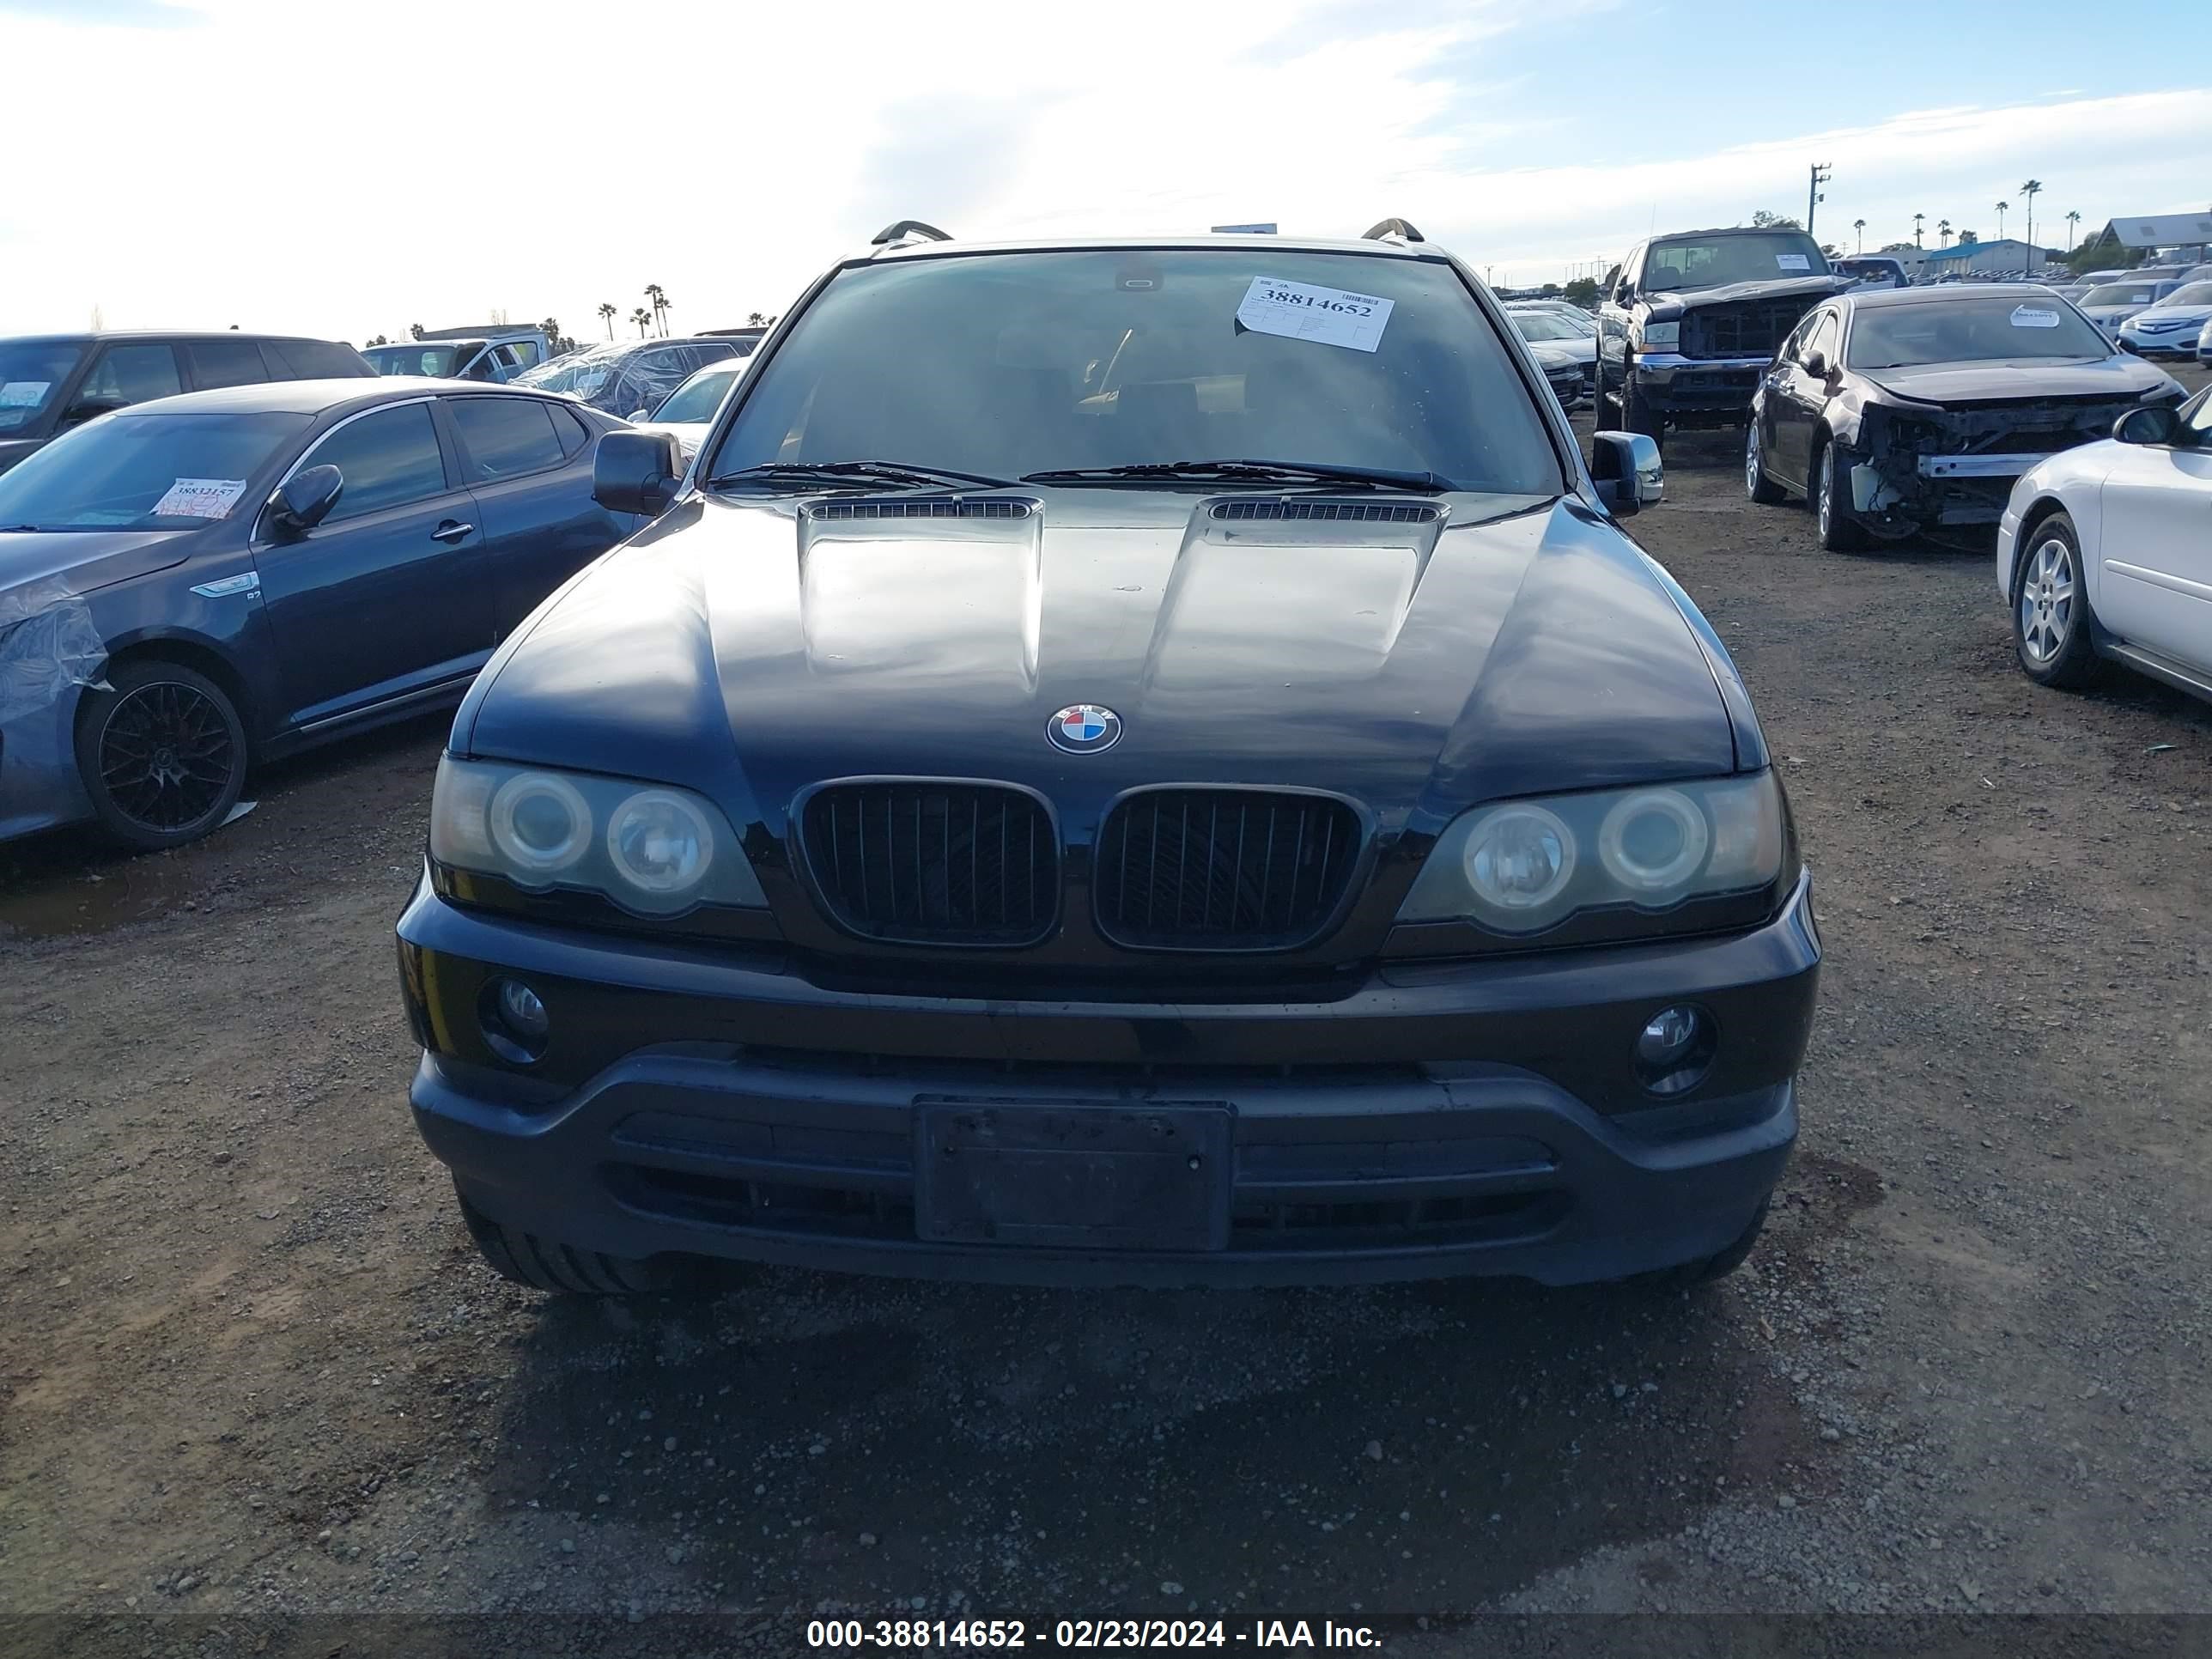 5UXFA53523LV76069  - BMW X5  2003 IMG - 11